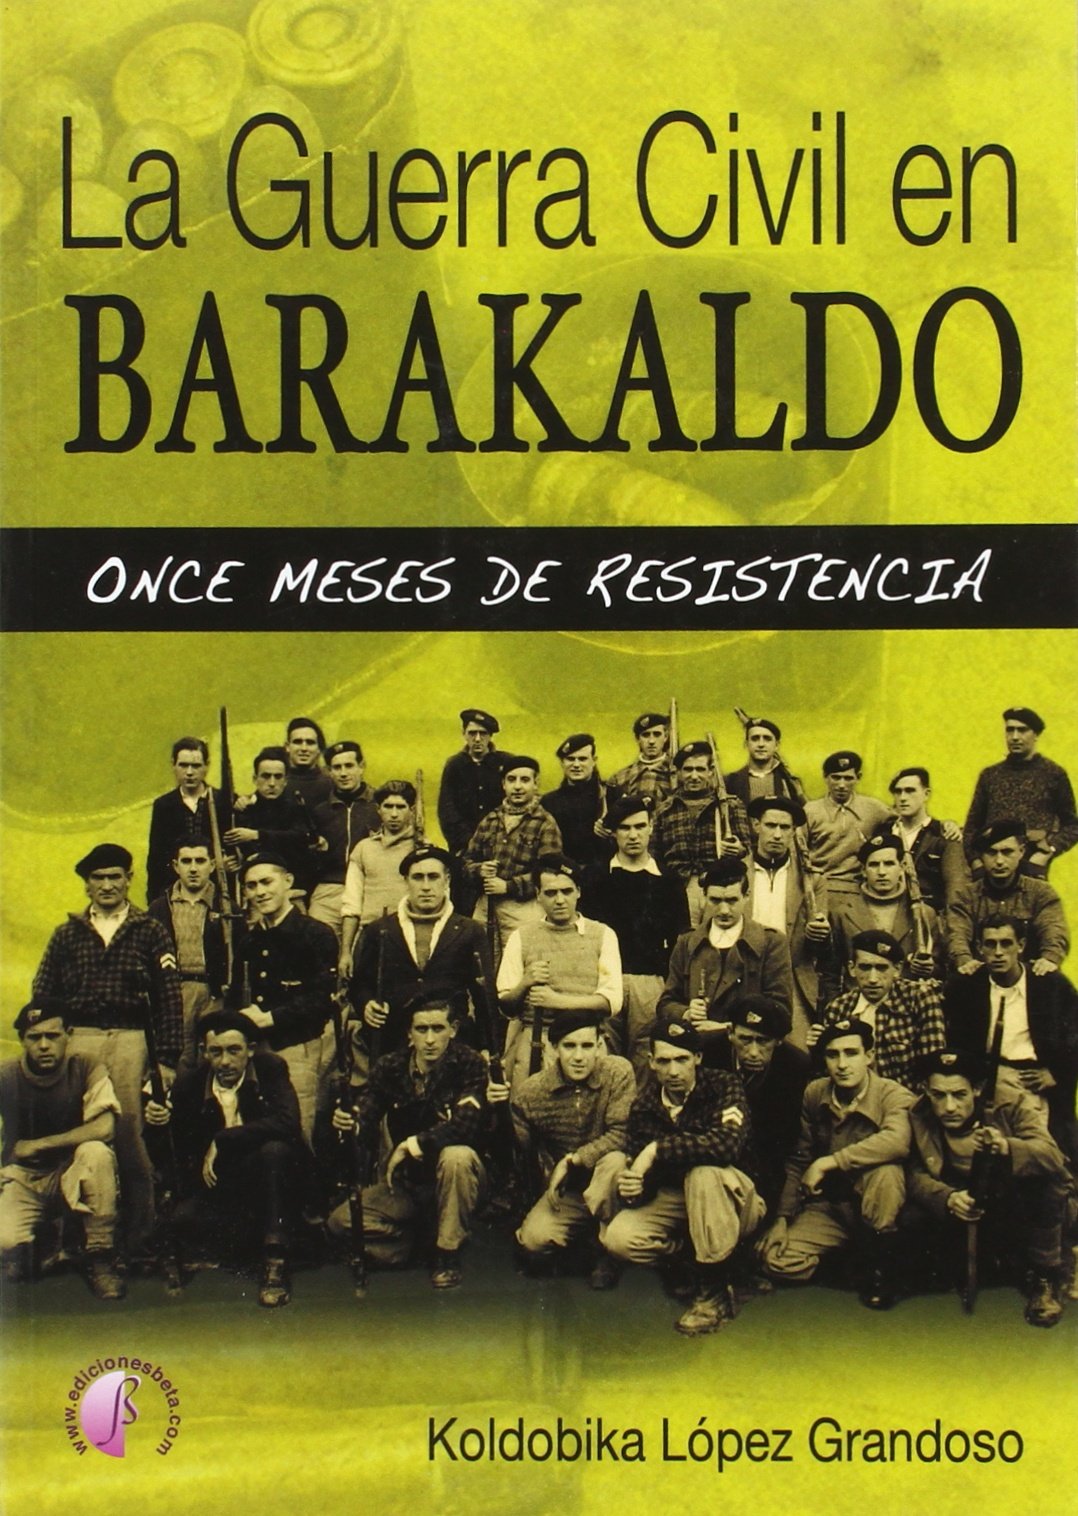 Guerra Civil en Barakaldo